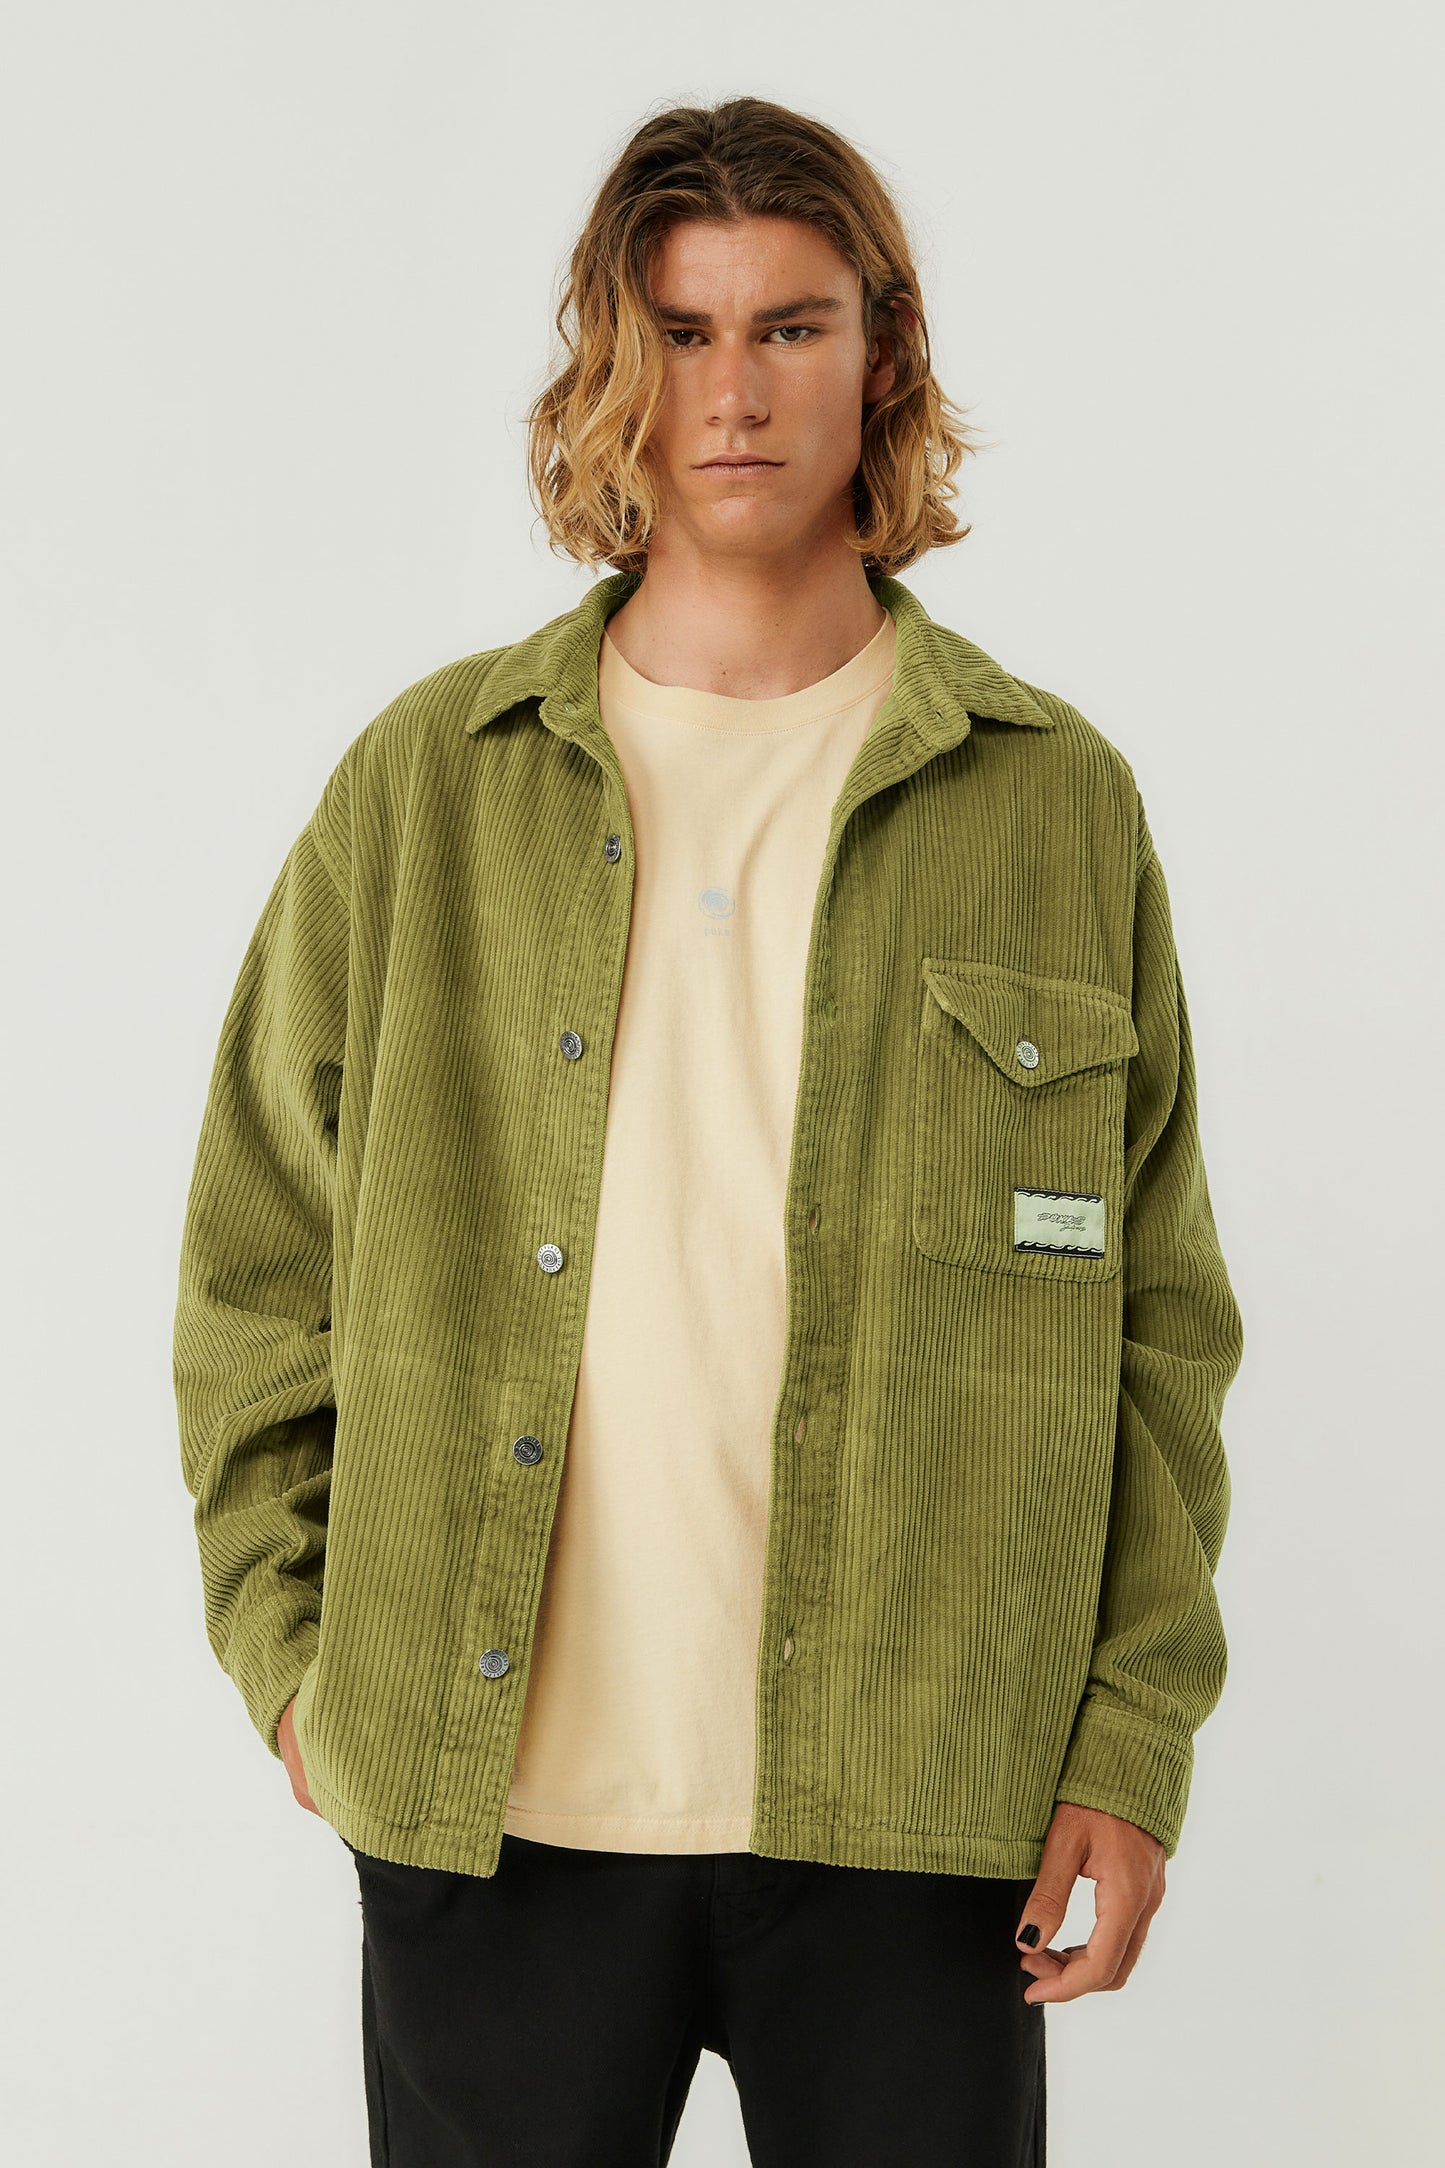 Pukas-Surf-Shop-pukas-corduroy-jacket-green